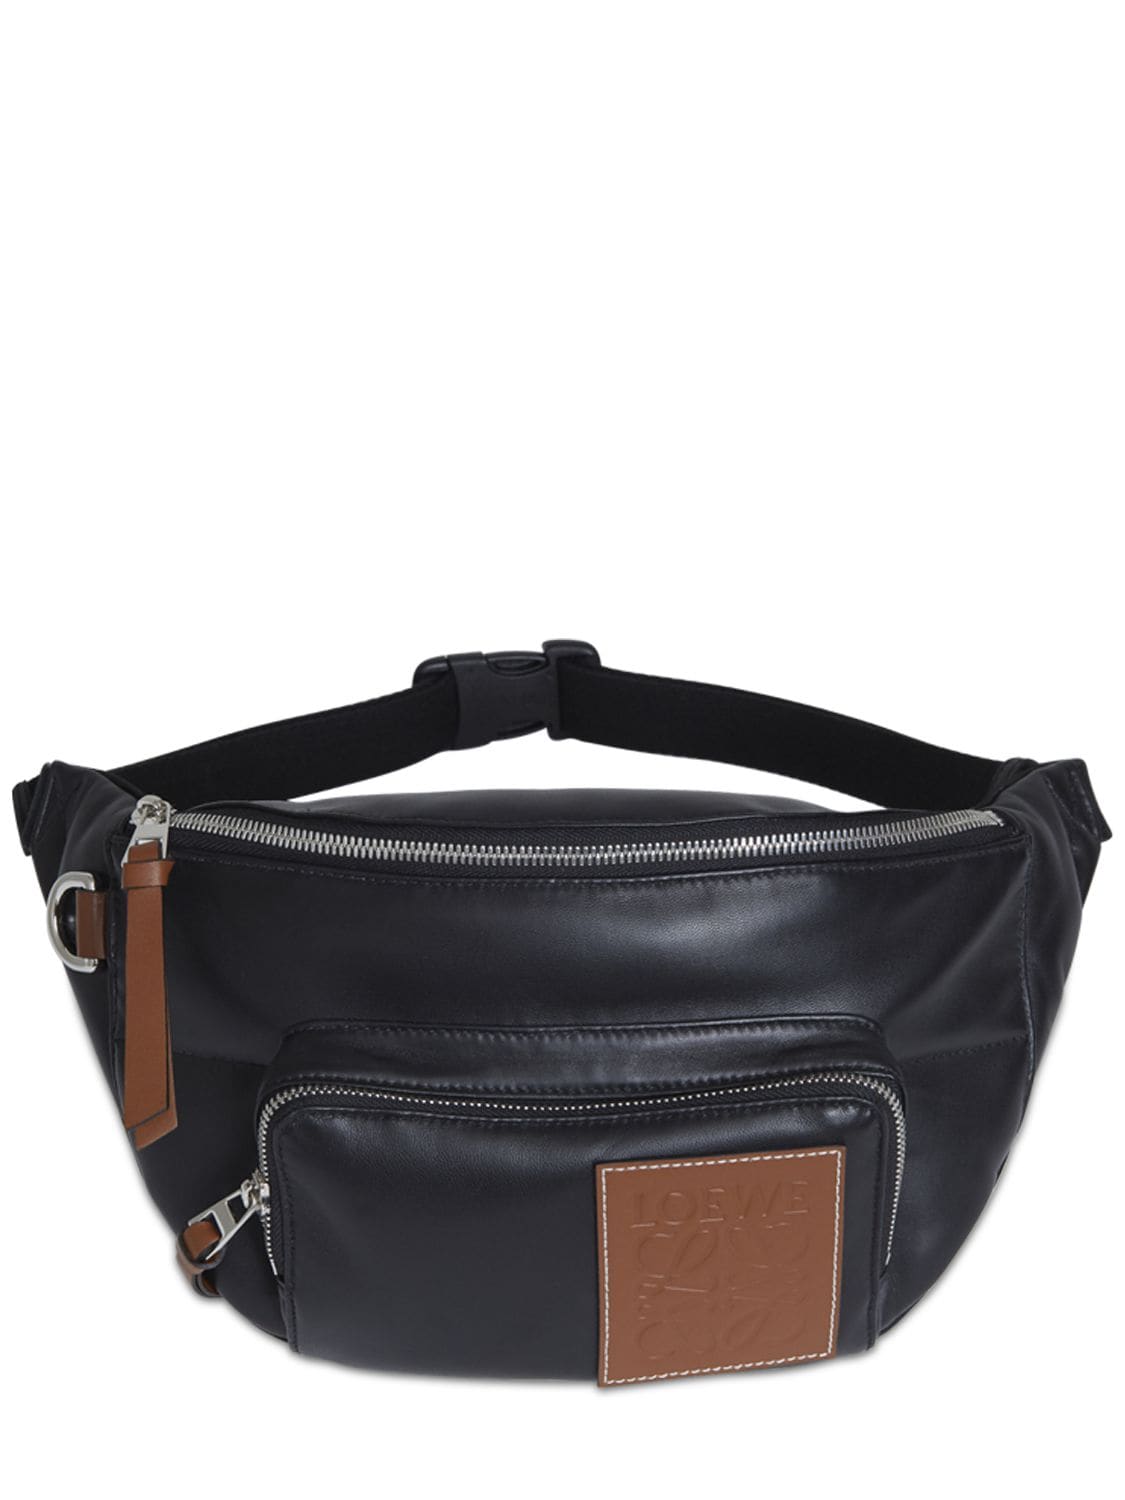 Loewe Waist Bag In Black Leather | ModeSens